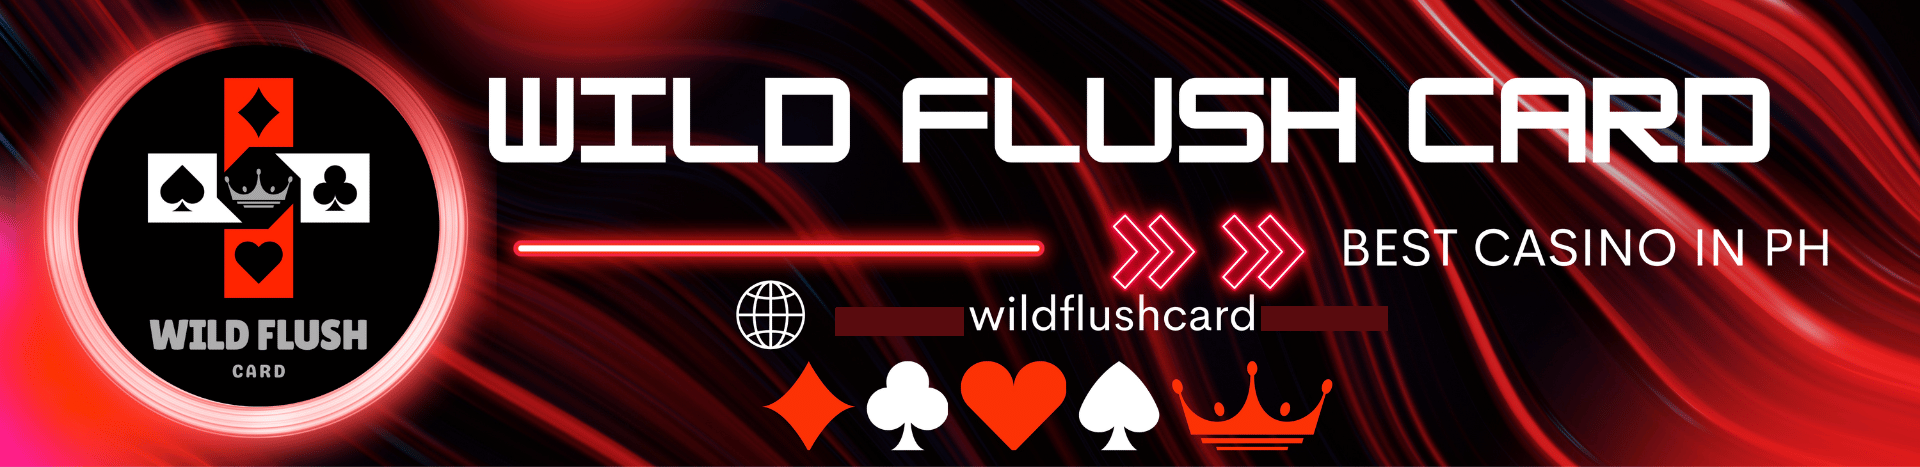 WILD-FLUSH-CARD_BANNER_FINAL